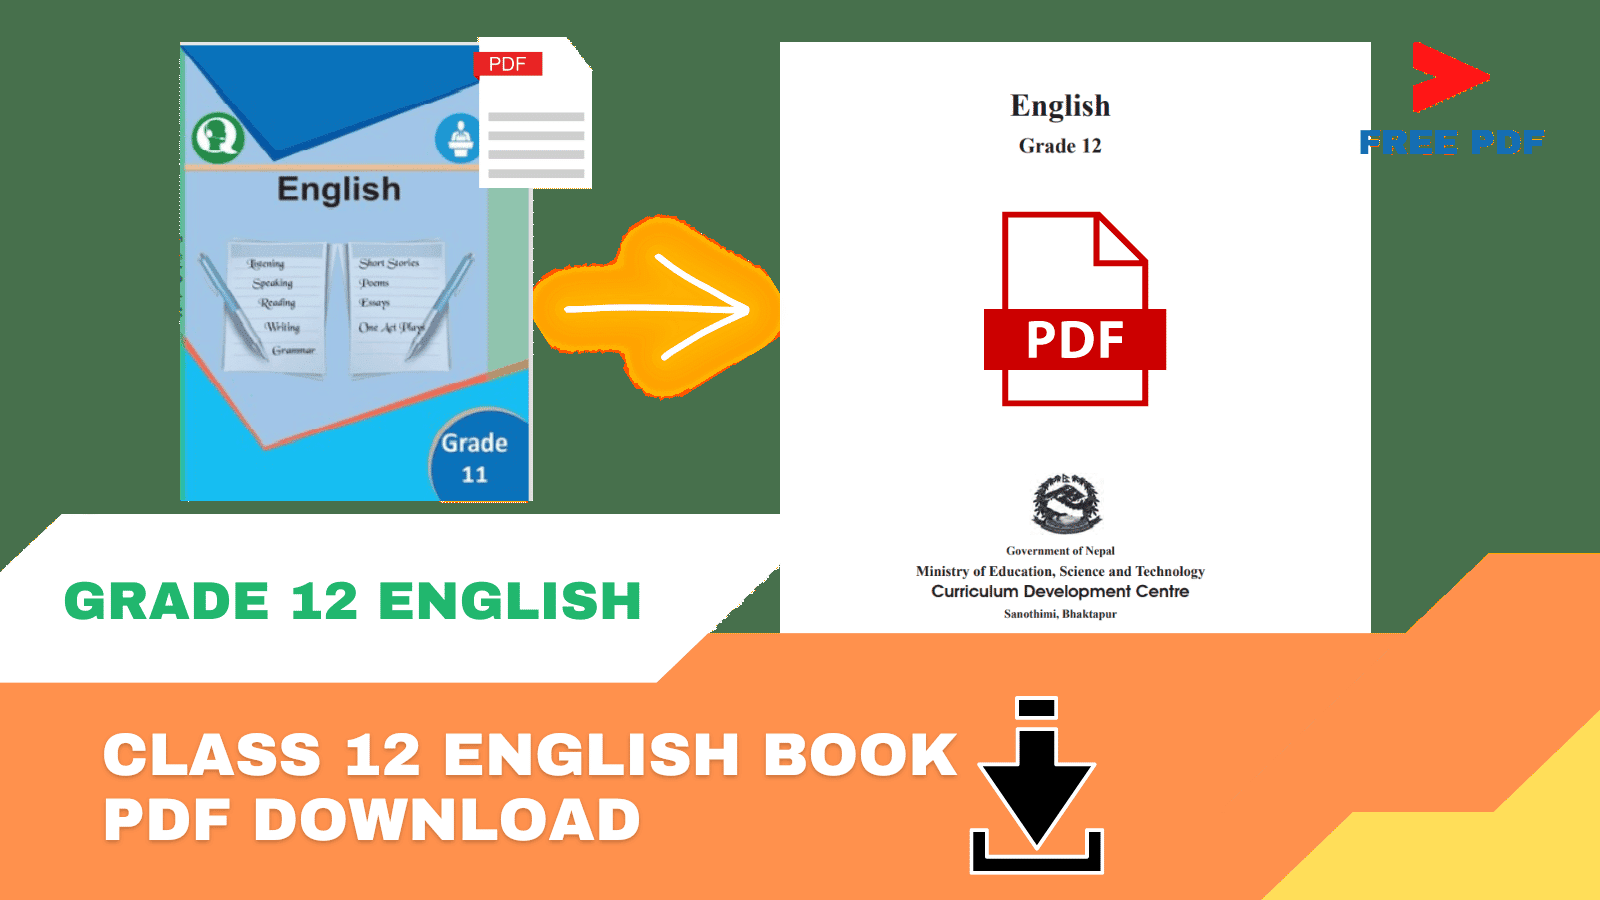 grade 12 english book review